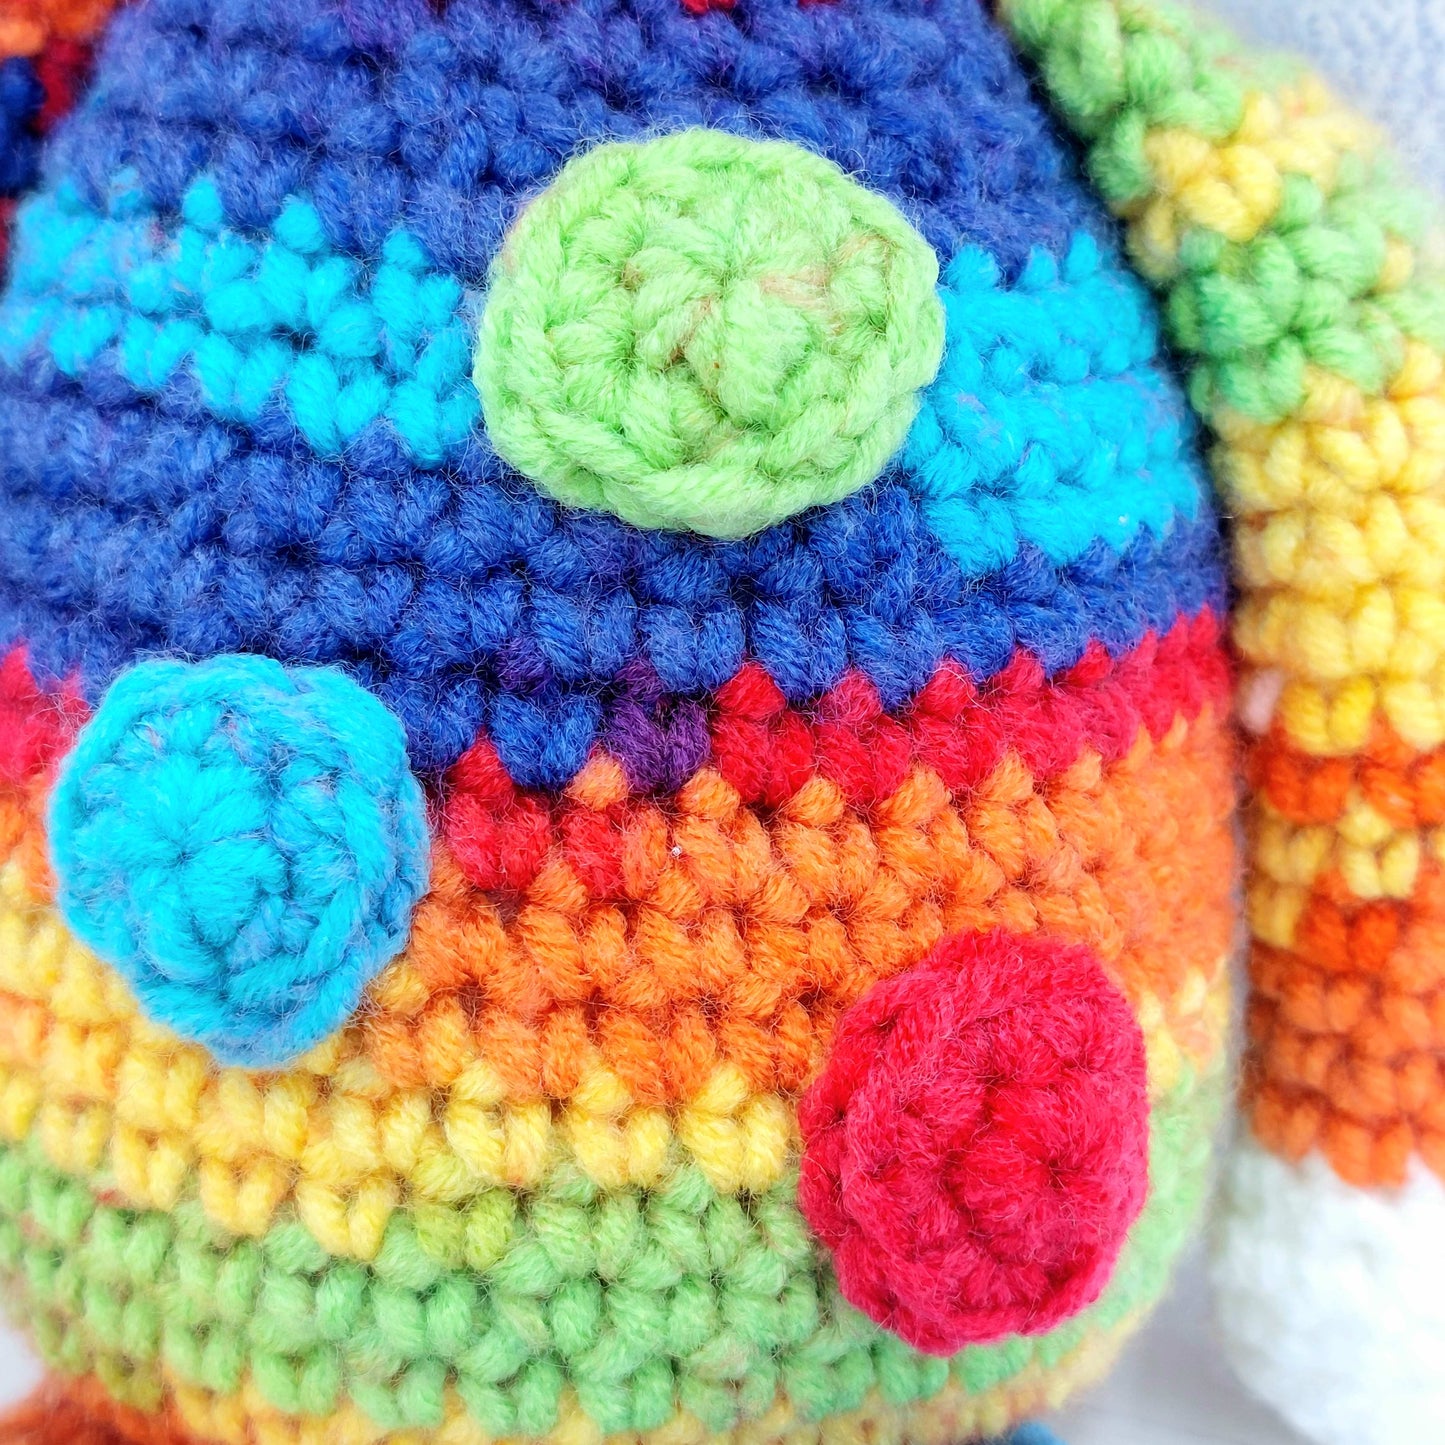 Sherbet the Rainbow Giraffe Crochet Kit for Complete Beginners with Video Tutorials